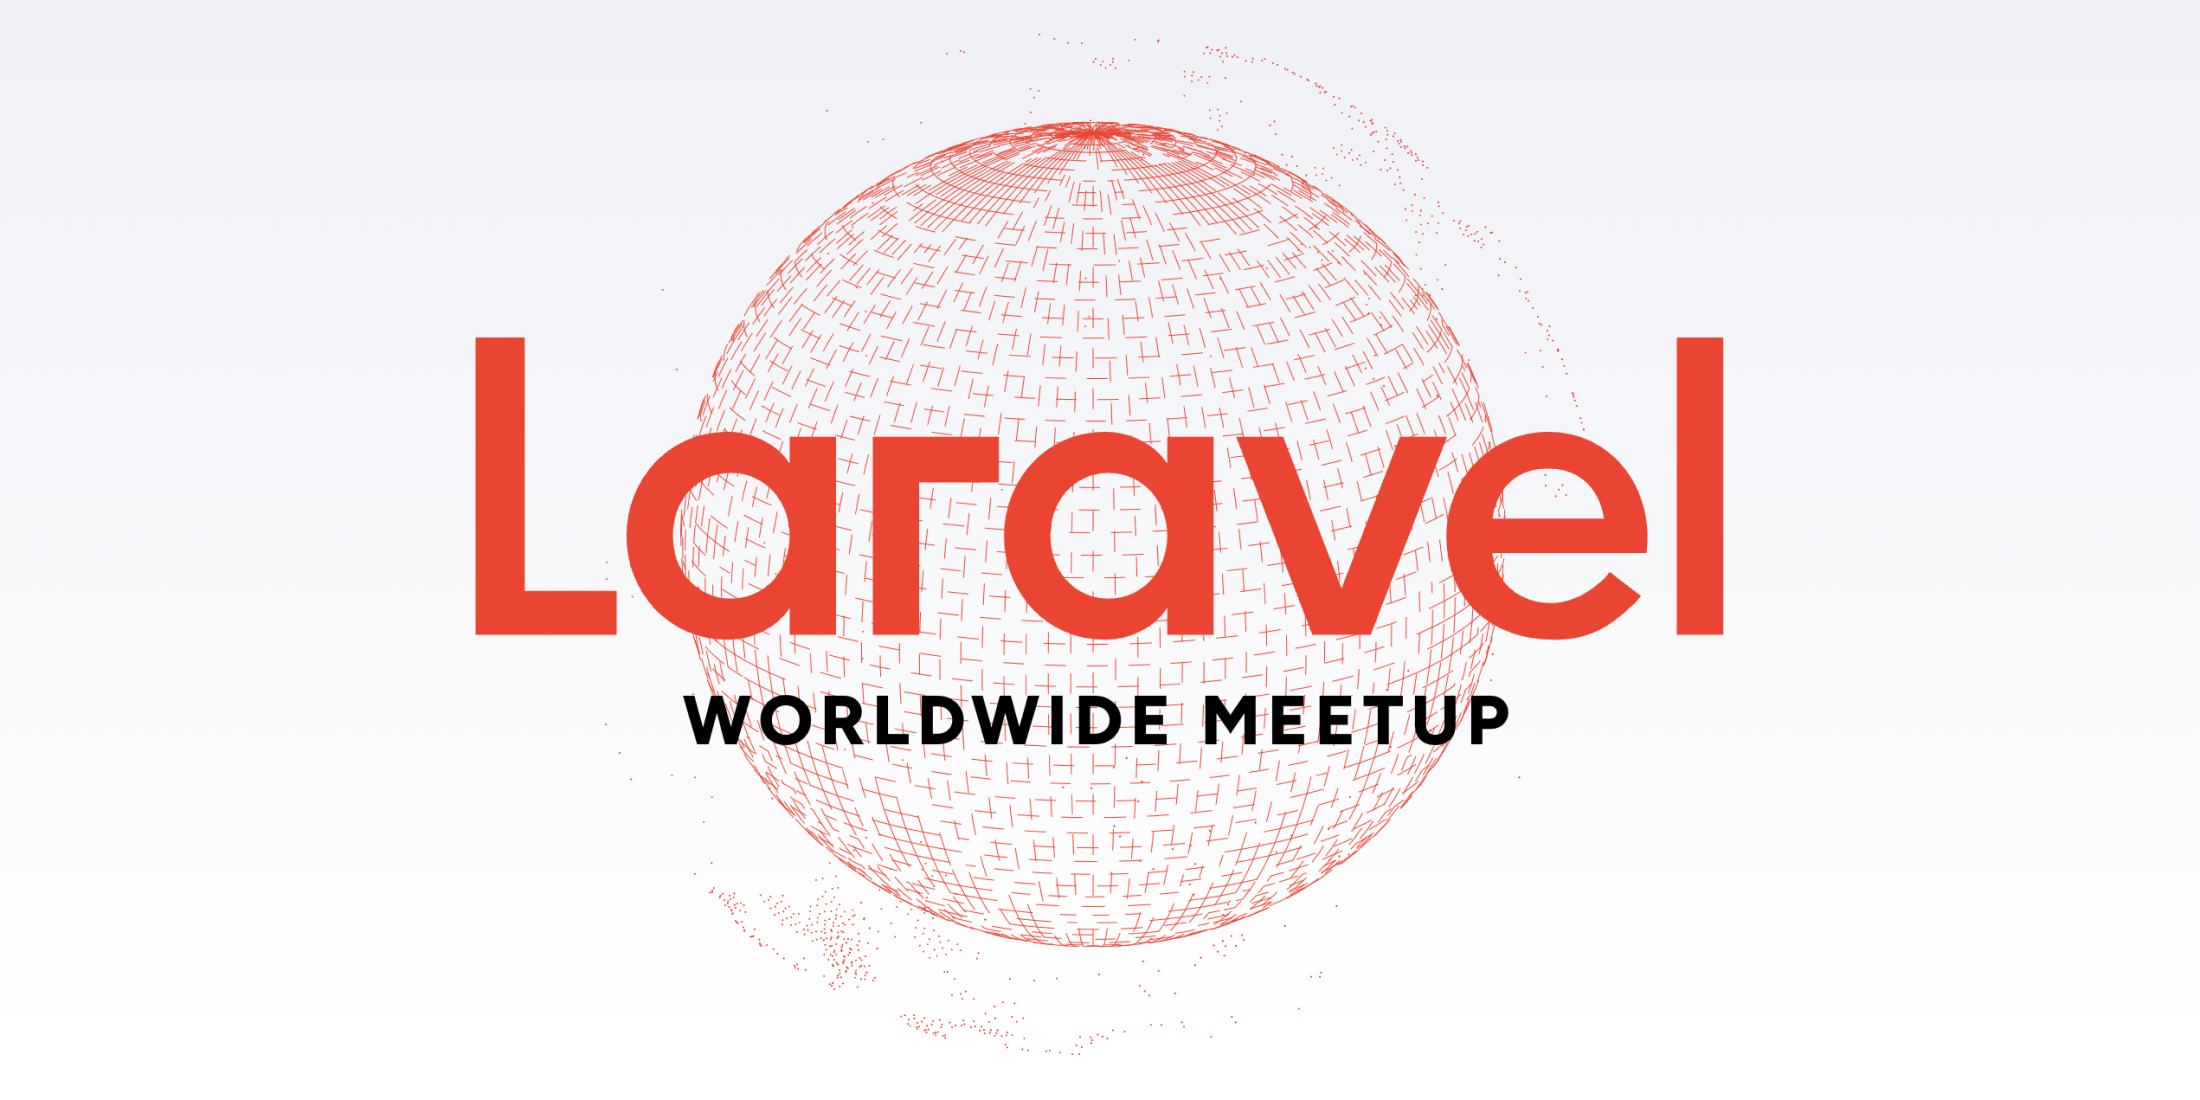 The Laravel Worldwide Meetup is Today image